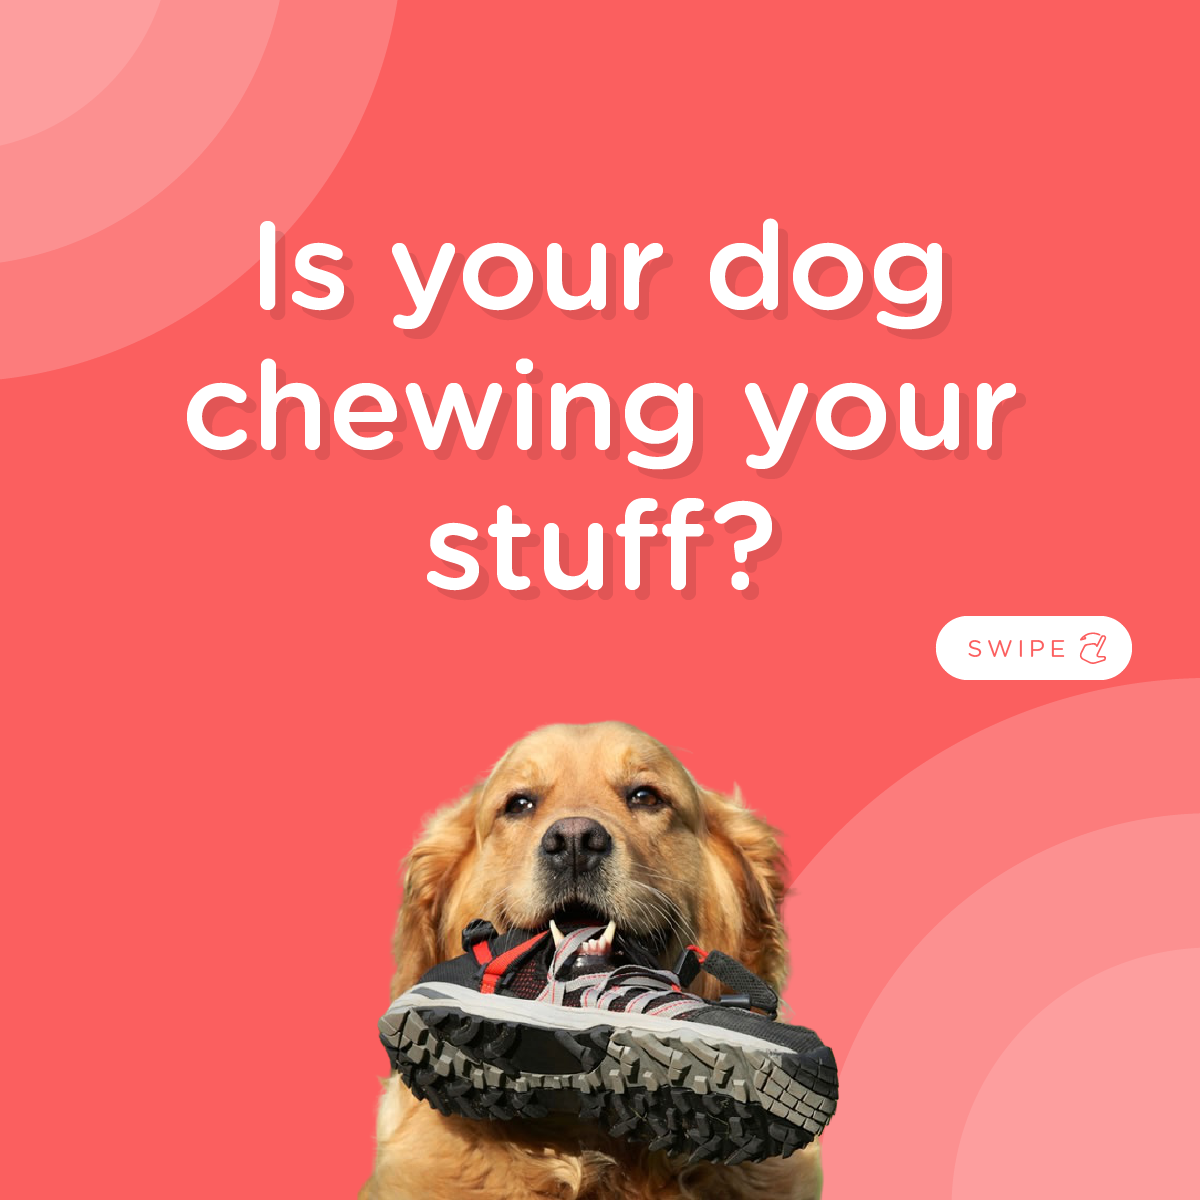 Don't Chew - Anti Chew Spray for Dogs